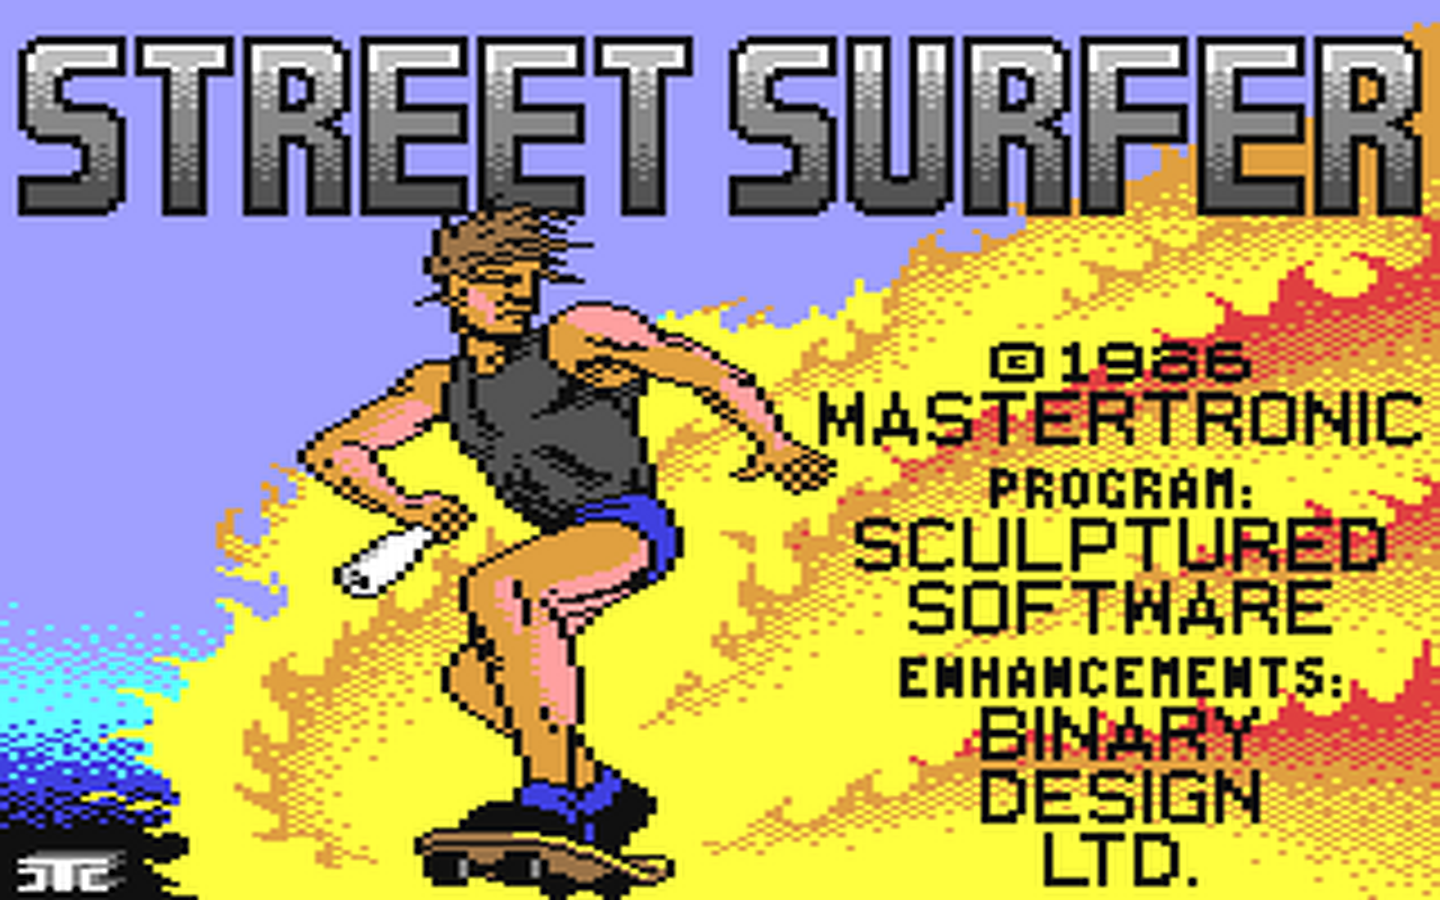 C64 GameBase Street_Surfer Mastertronic/Entertainment_USA 1986